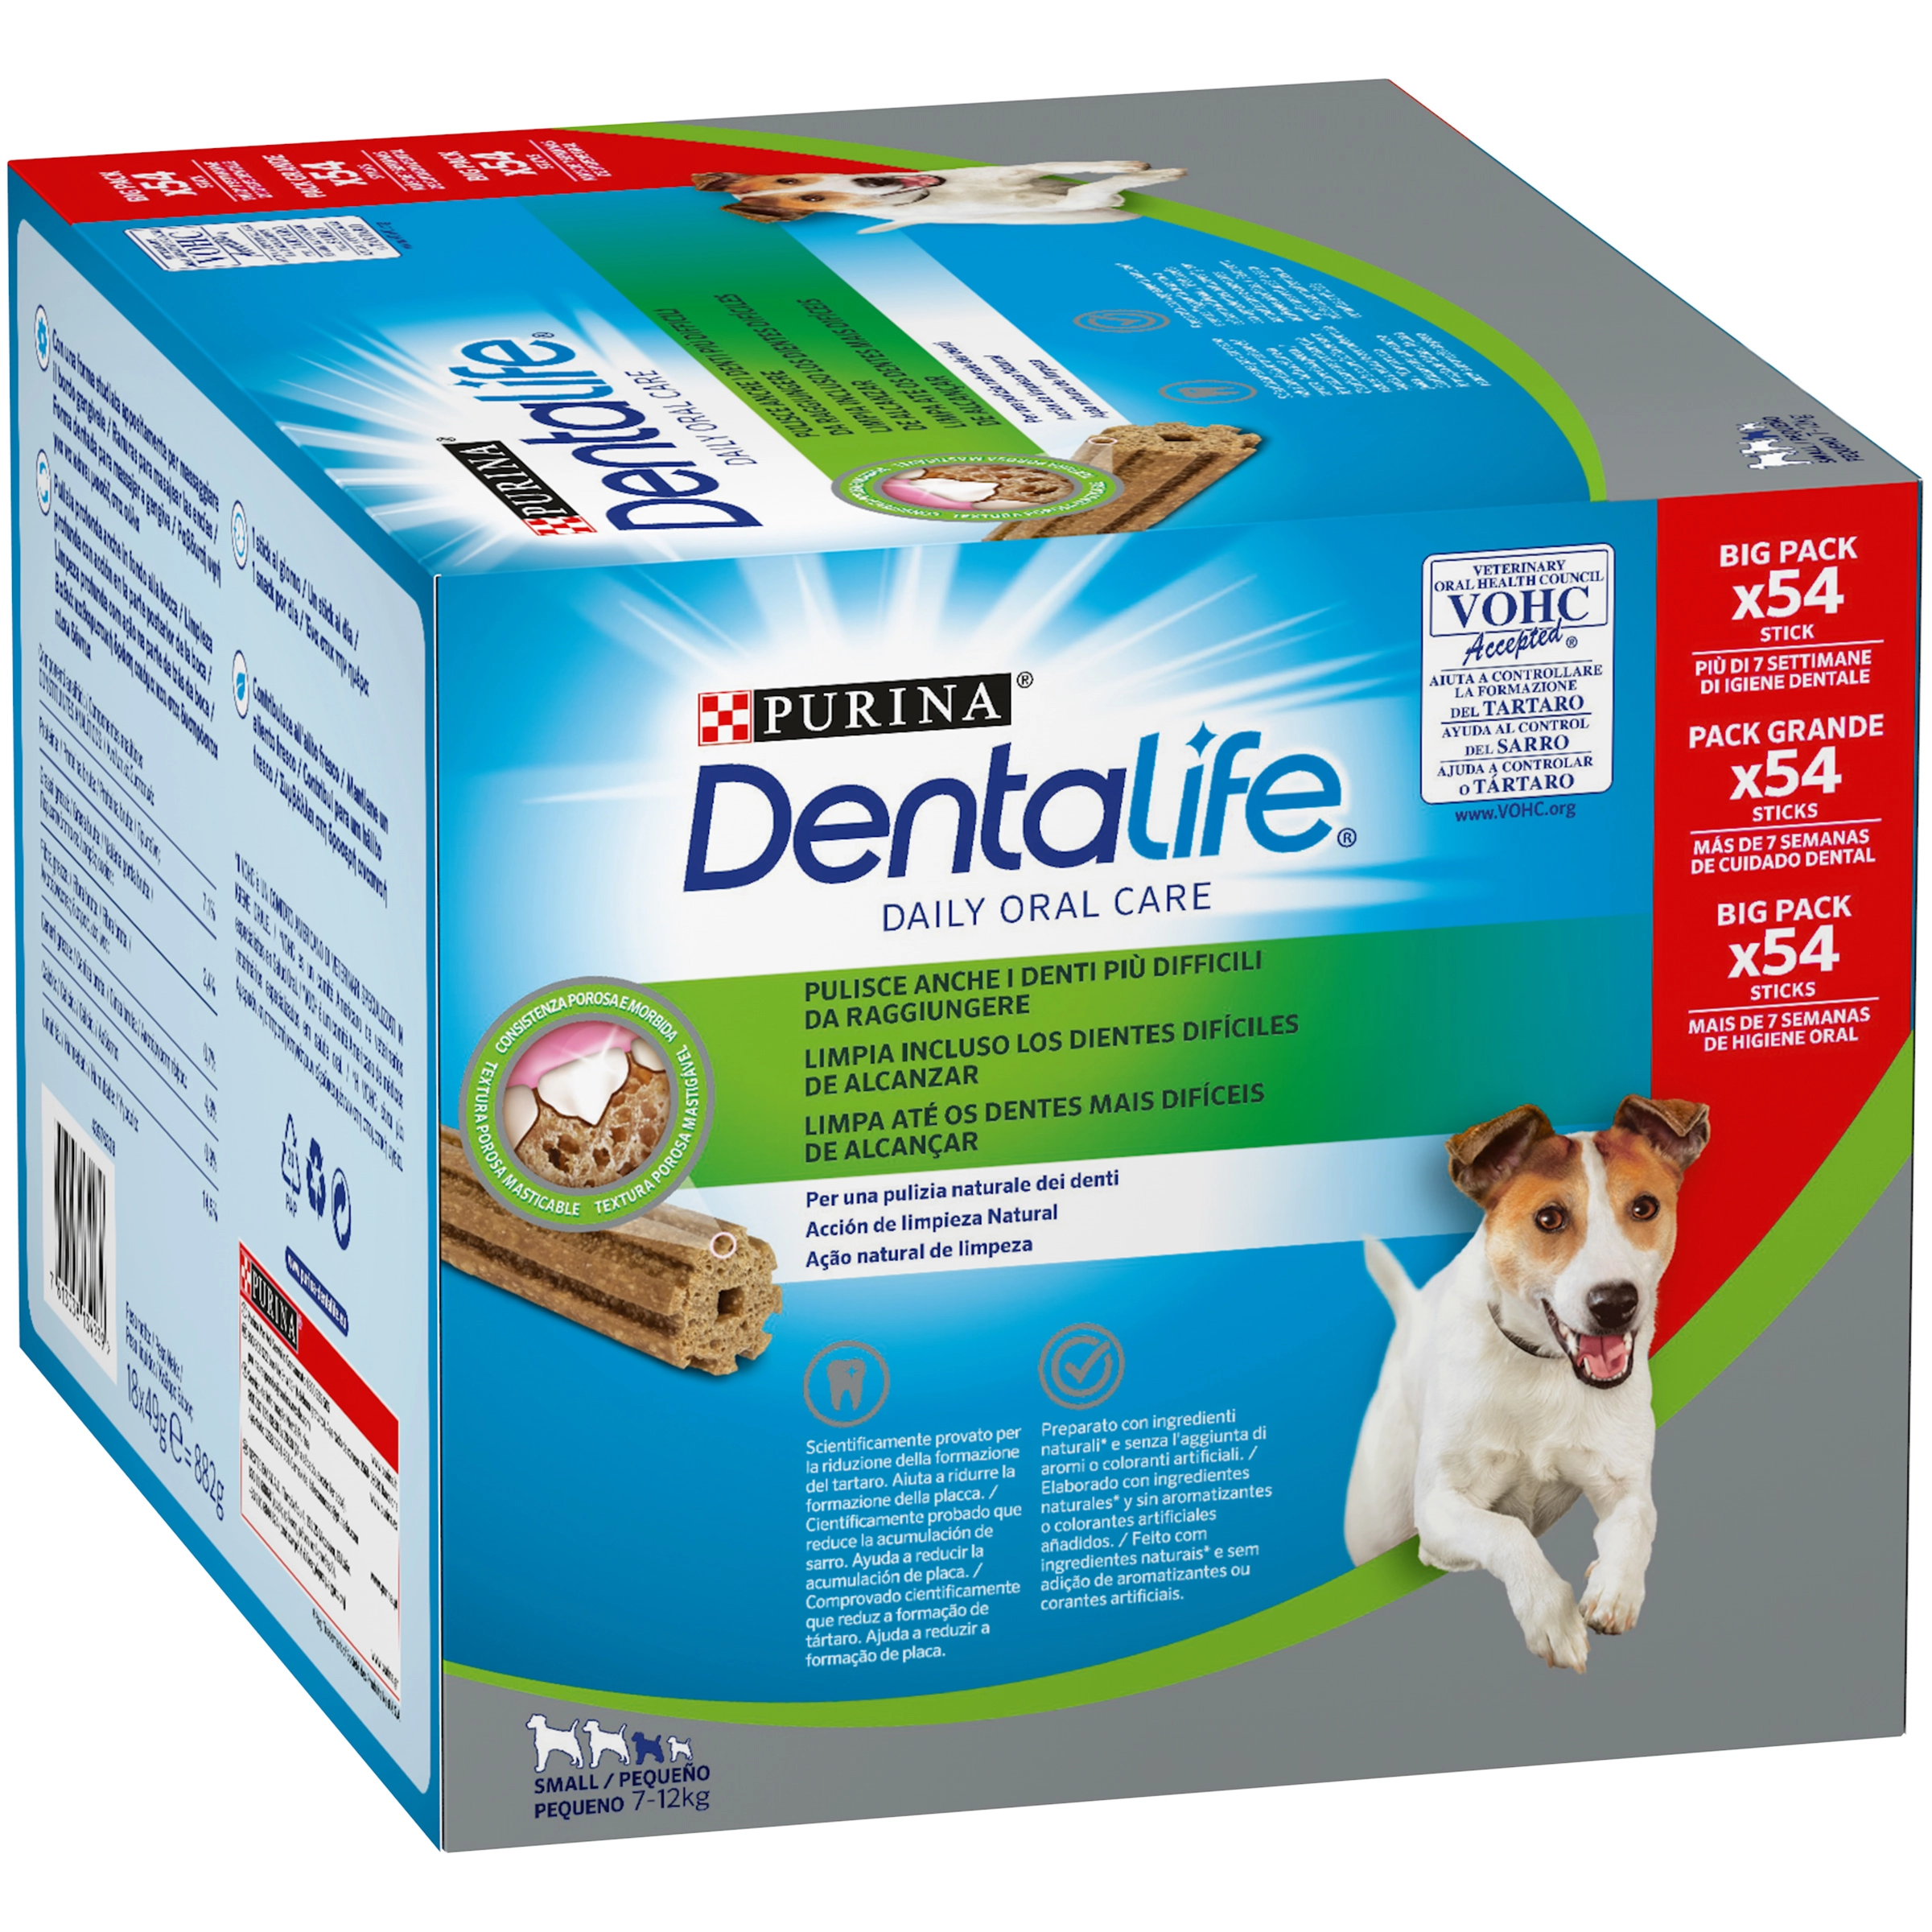 Masticativi per cane multipack Dentalife Small 54 stick